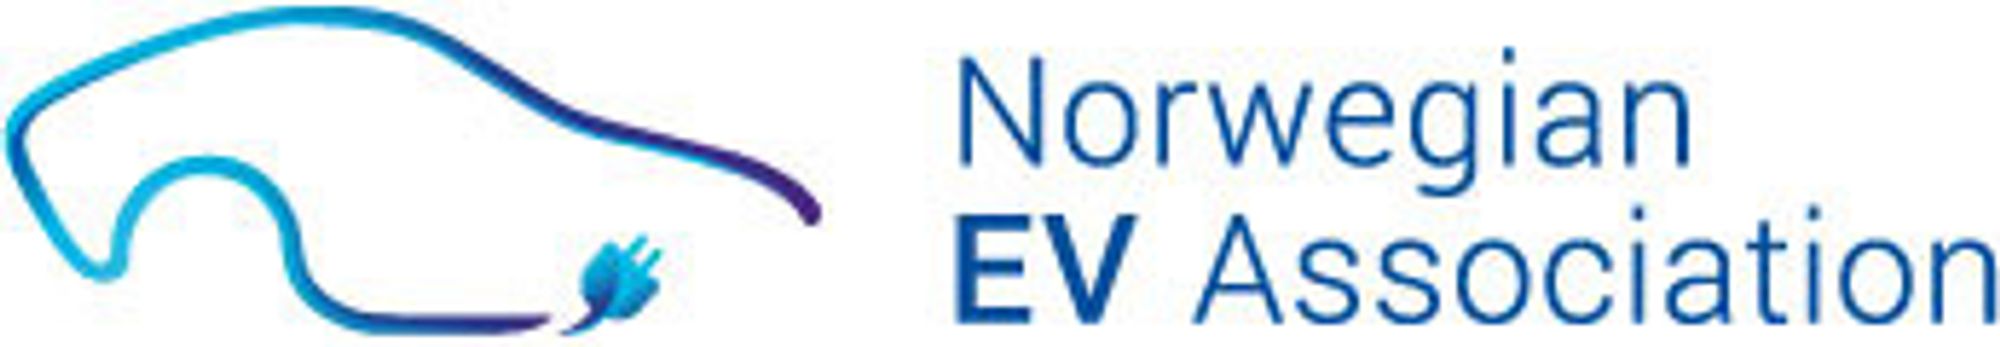 Norwegian EV Association